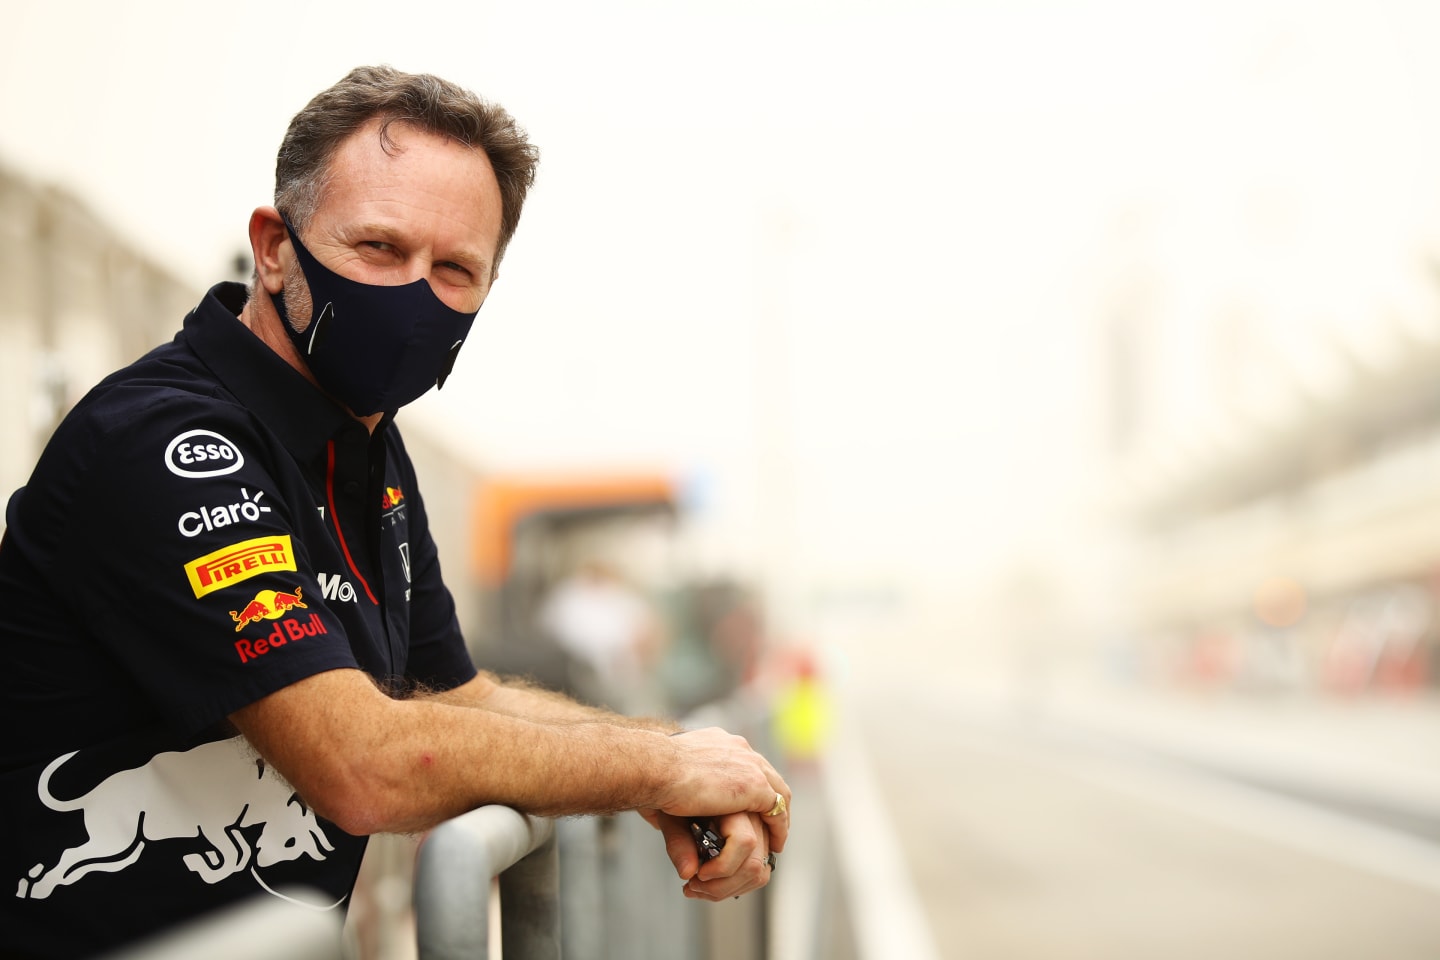 BAHRAIN, BAHRAIN - MARCH 12: Red Bull Racing Team Principal Christian Horner looks on from the